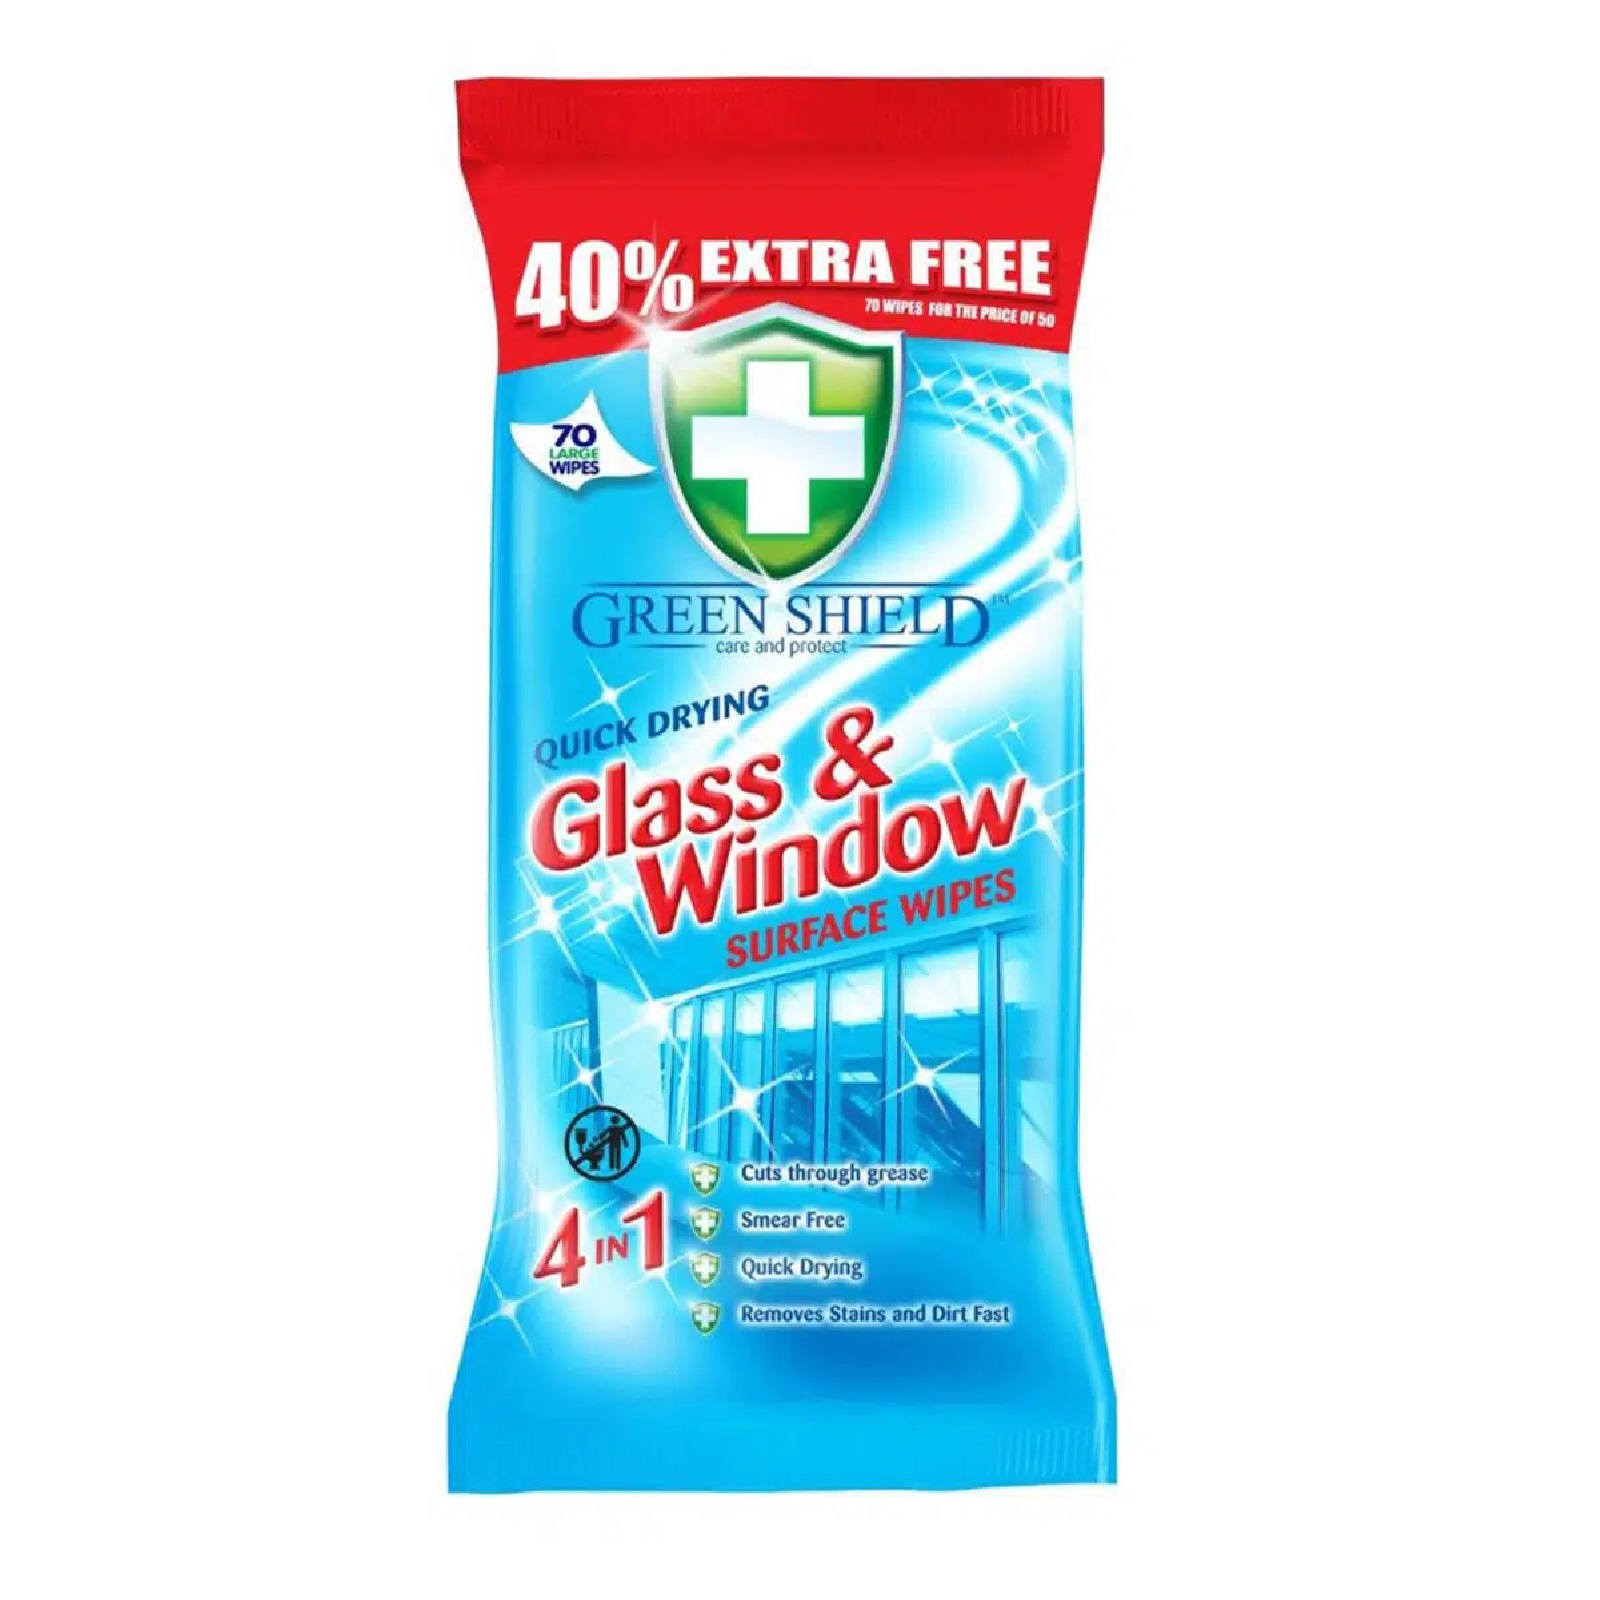 Greenshield Glass & Window Wipes (70 Wipes)